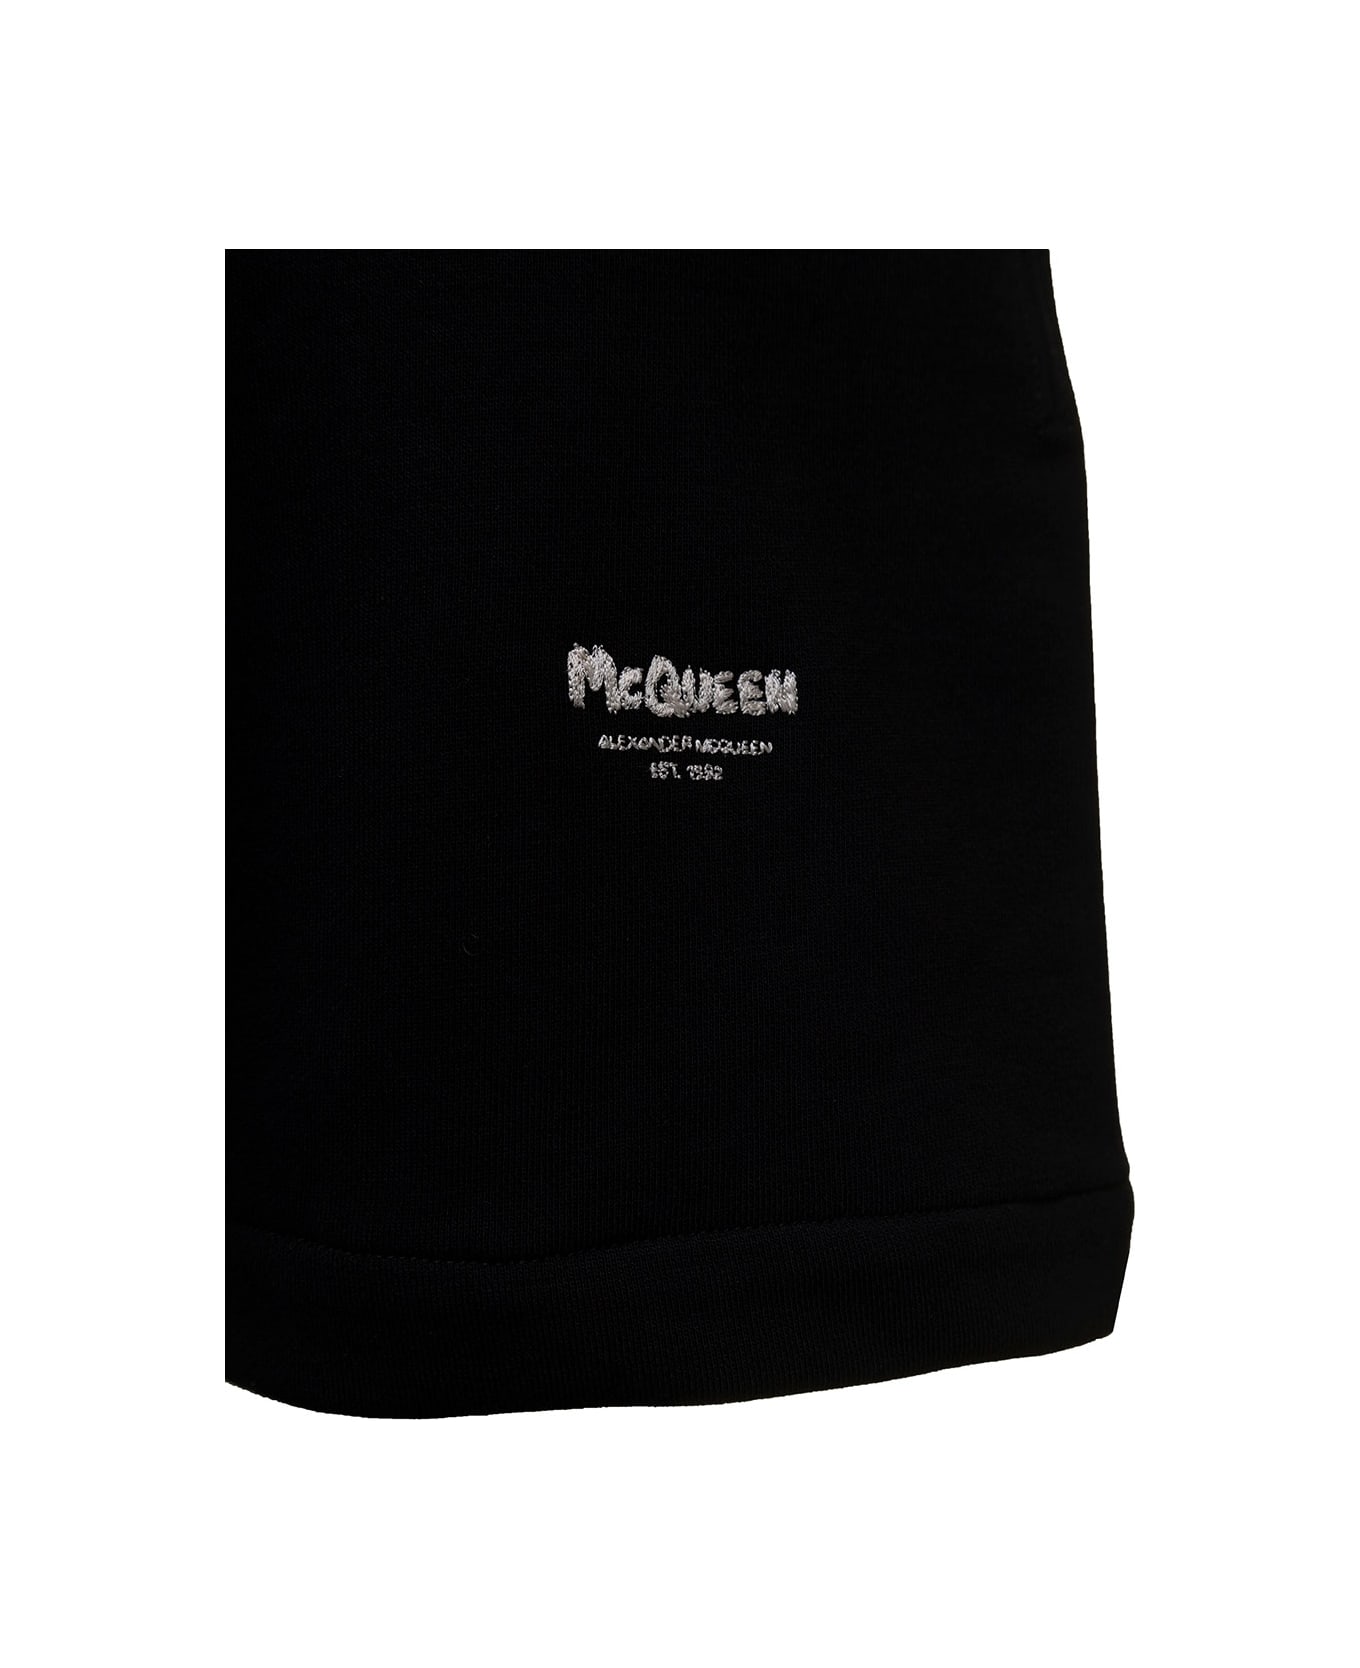 Alexander McQueen Man's Black Cotton Bermuda Shorts With  Logo - Black